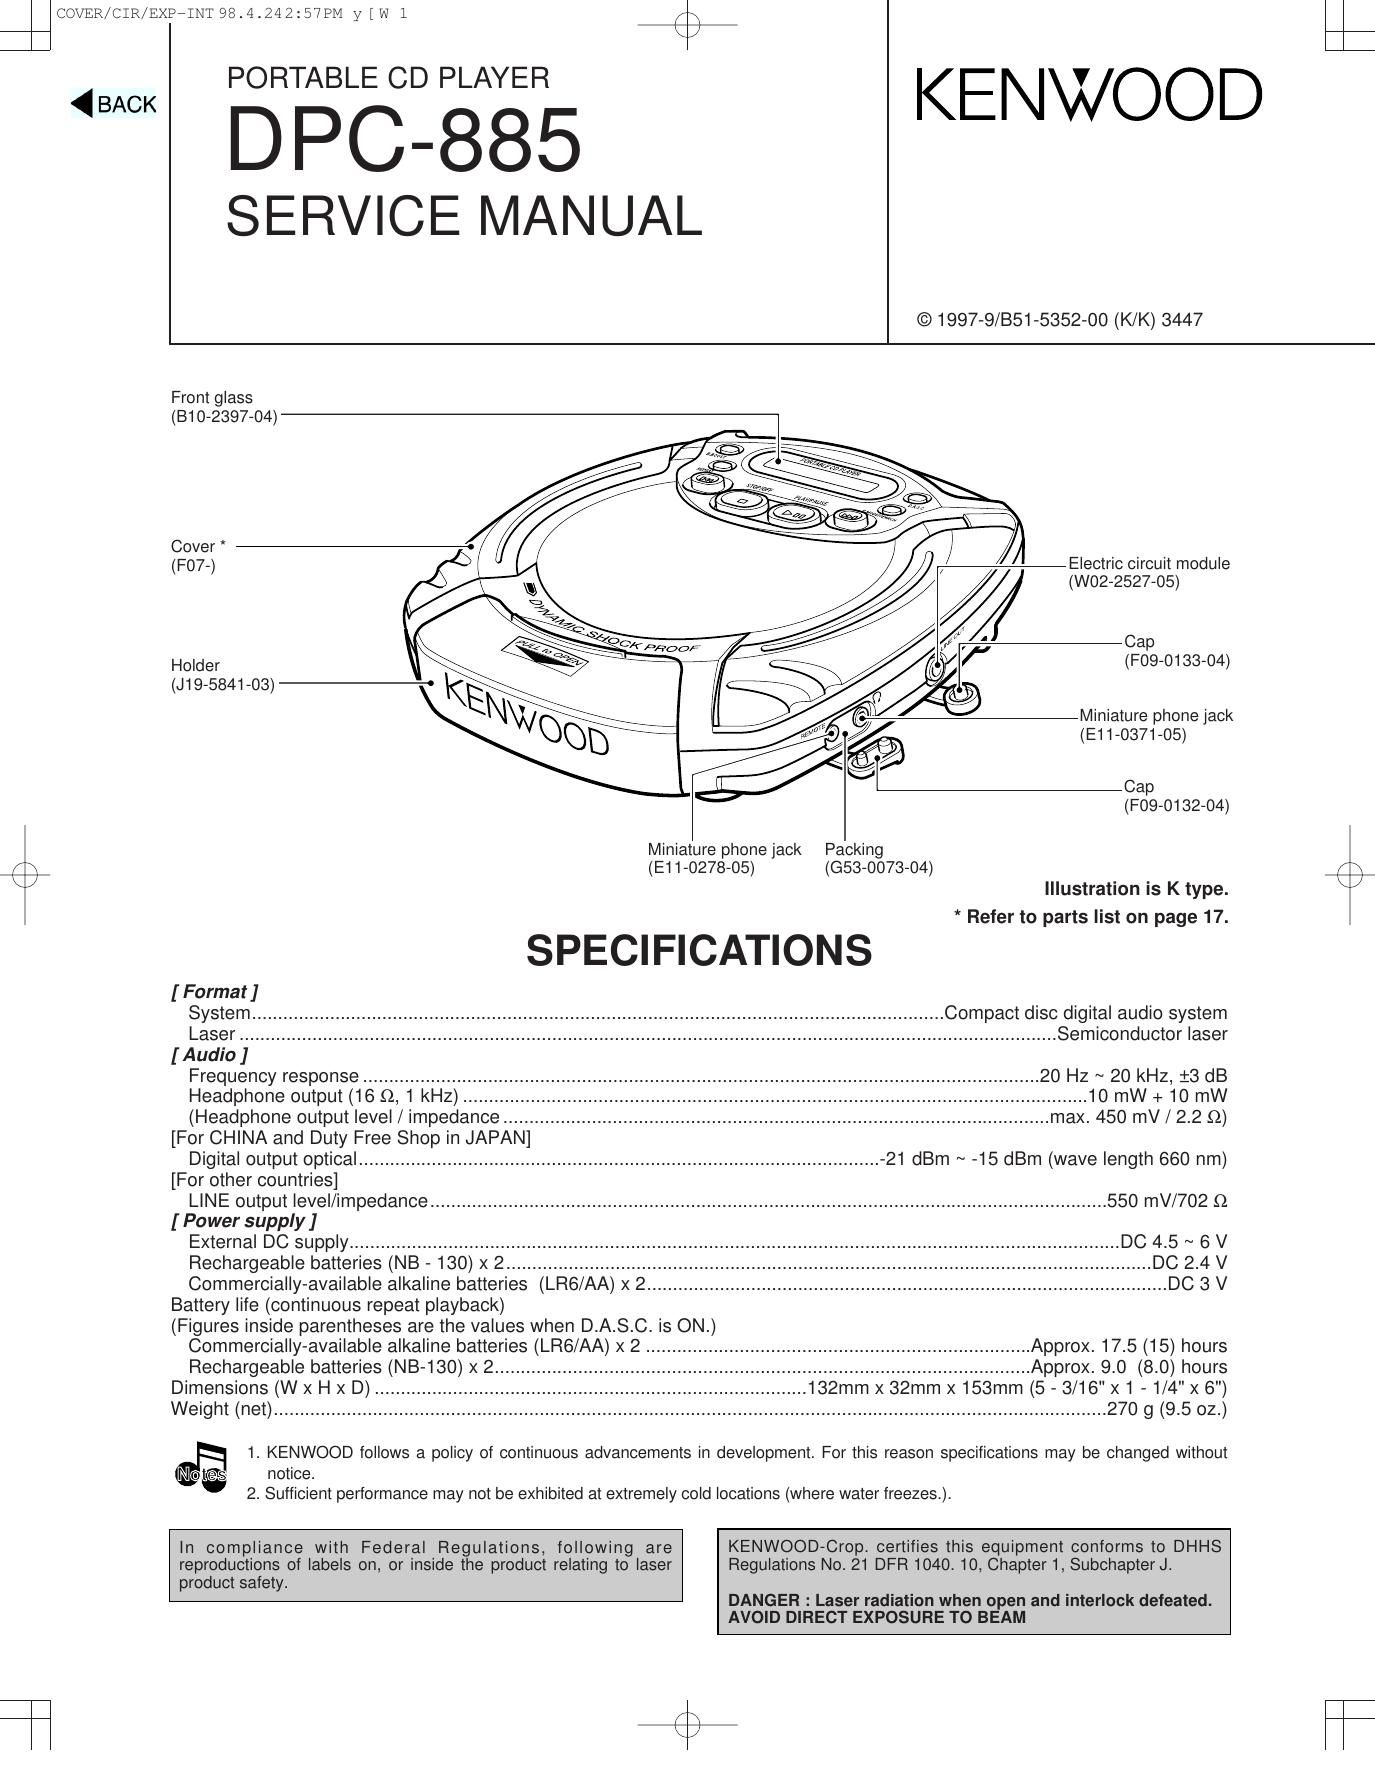 Kenwood DPC 885 Service Manual